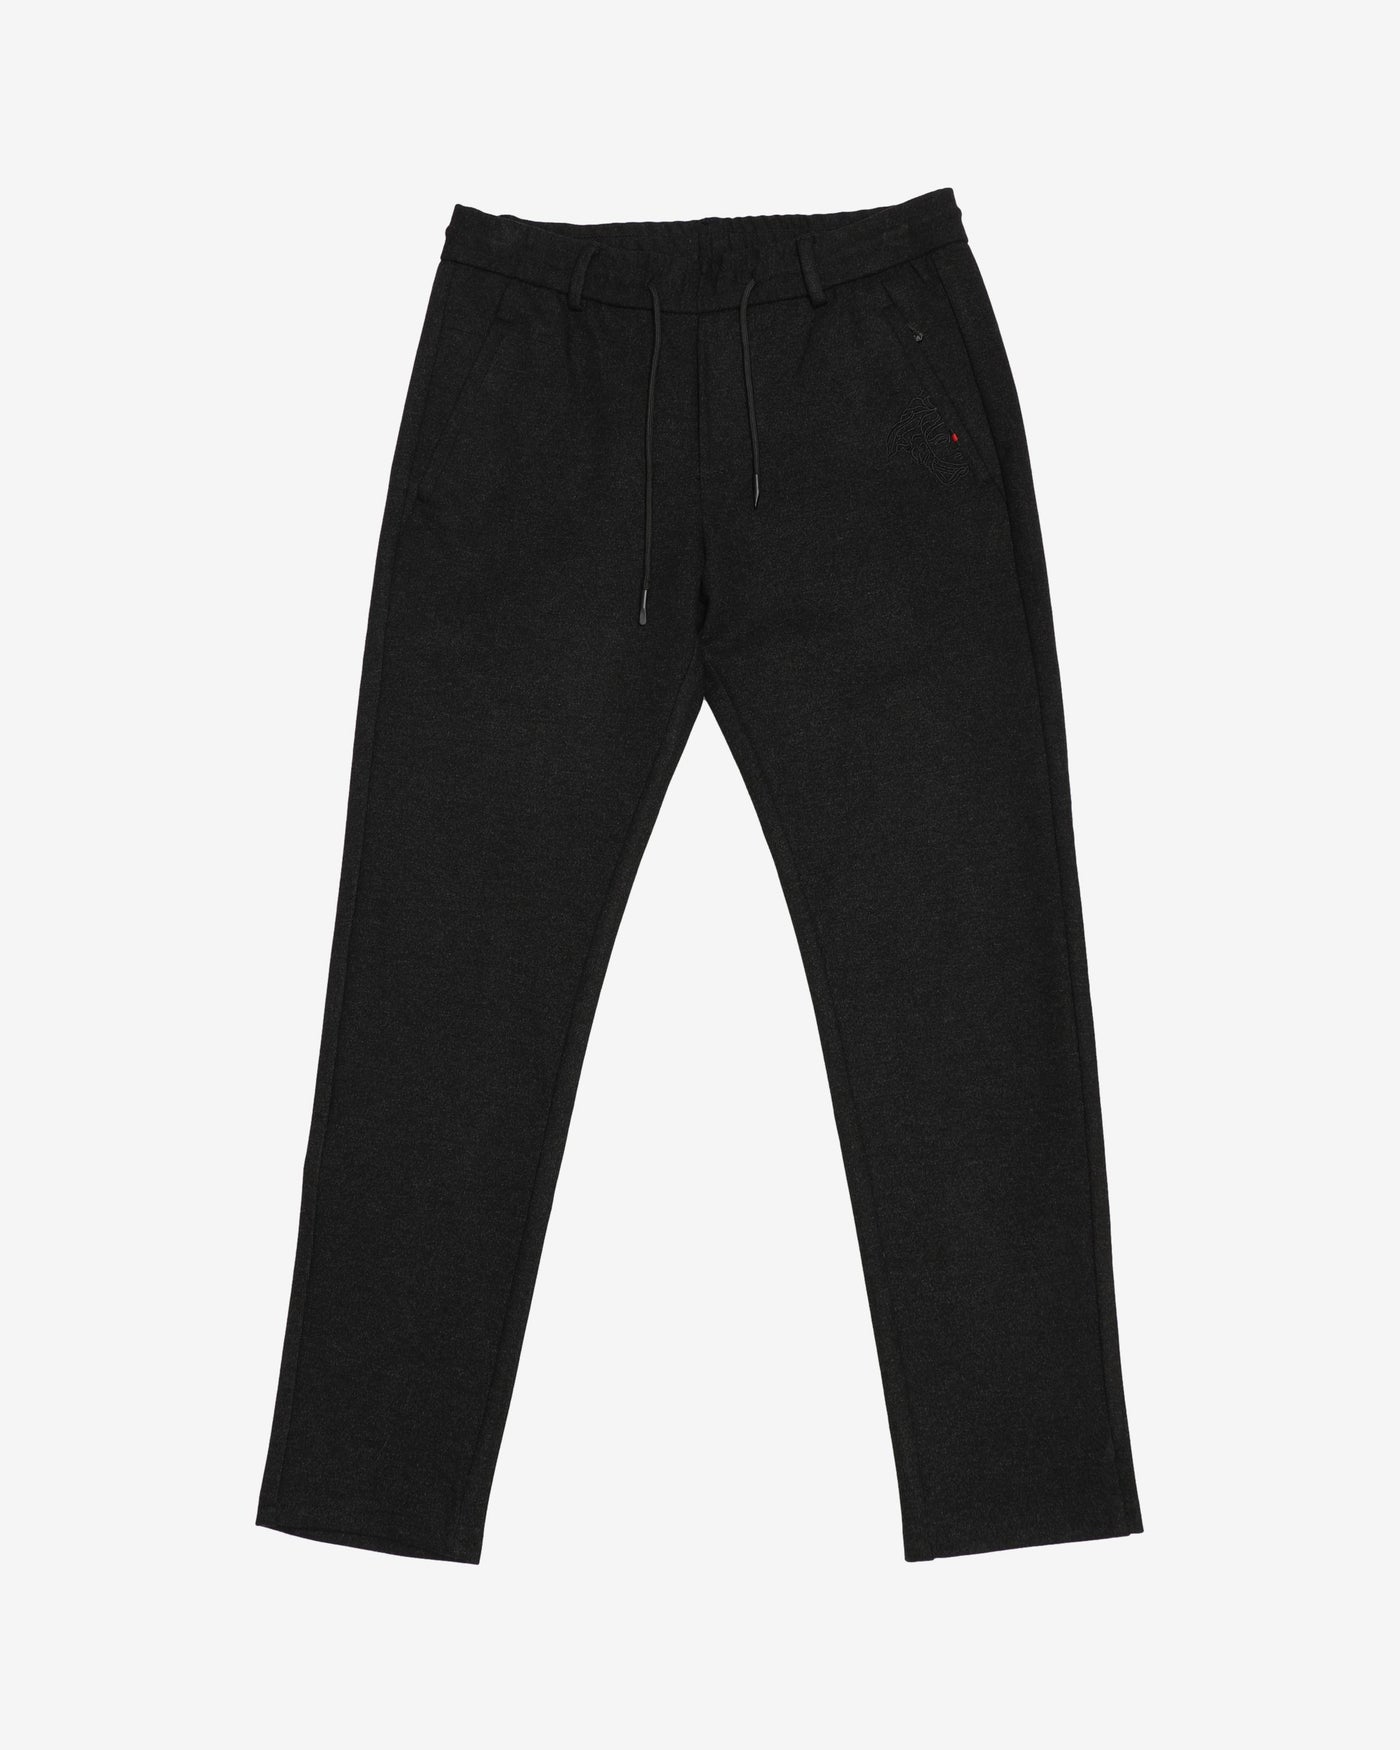 Black / Charcoal Versace Tracksuit Bottoms / Trousers - W33 L30